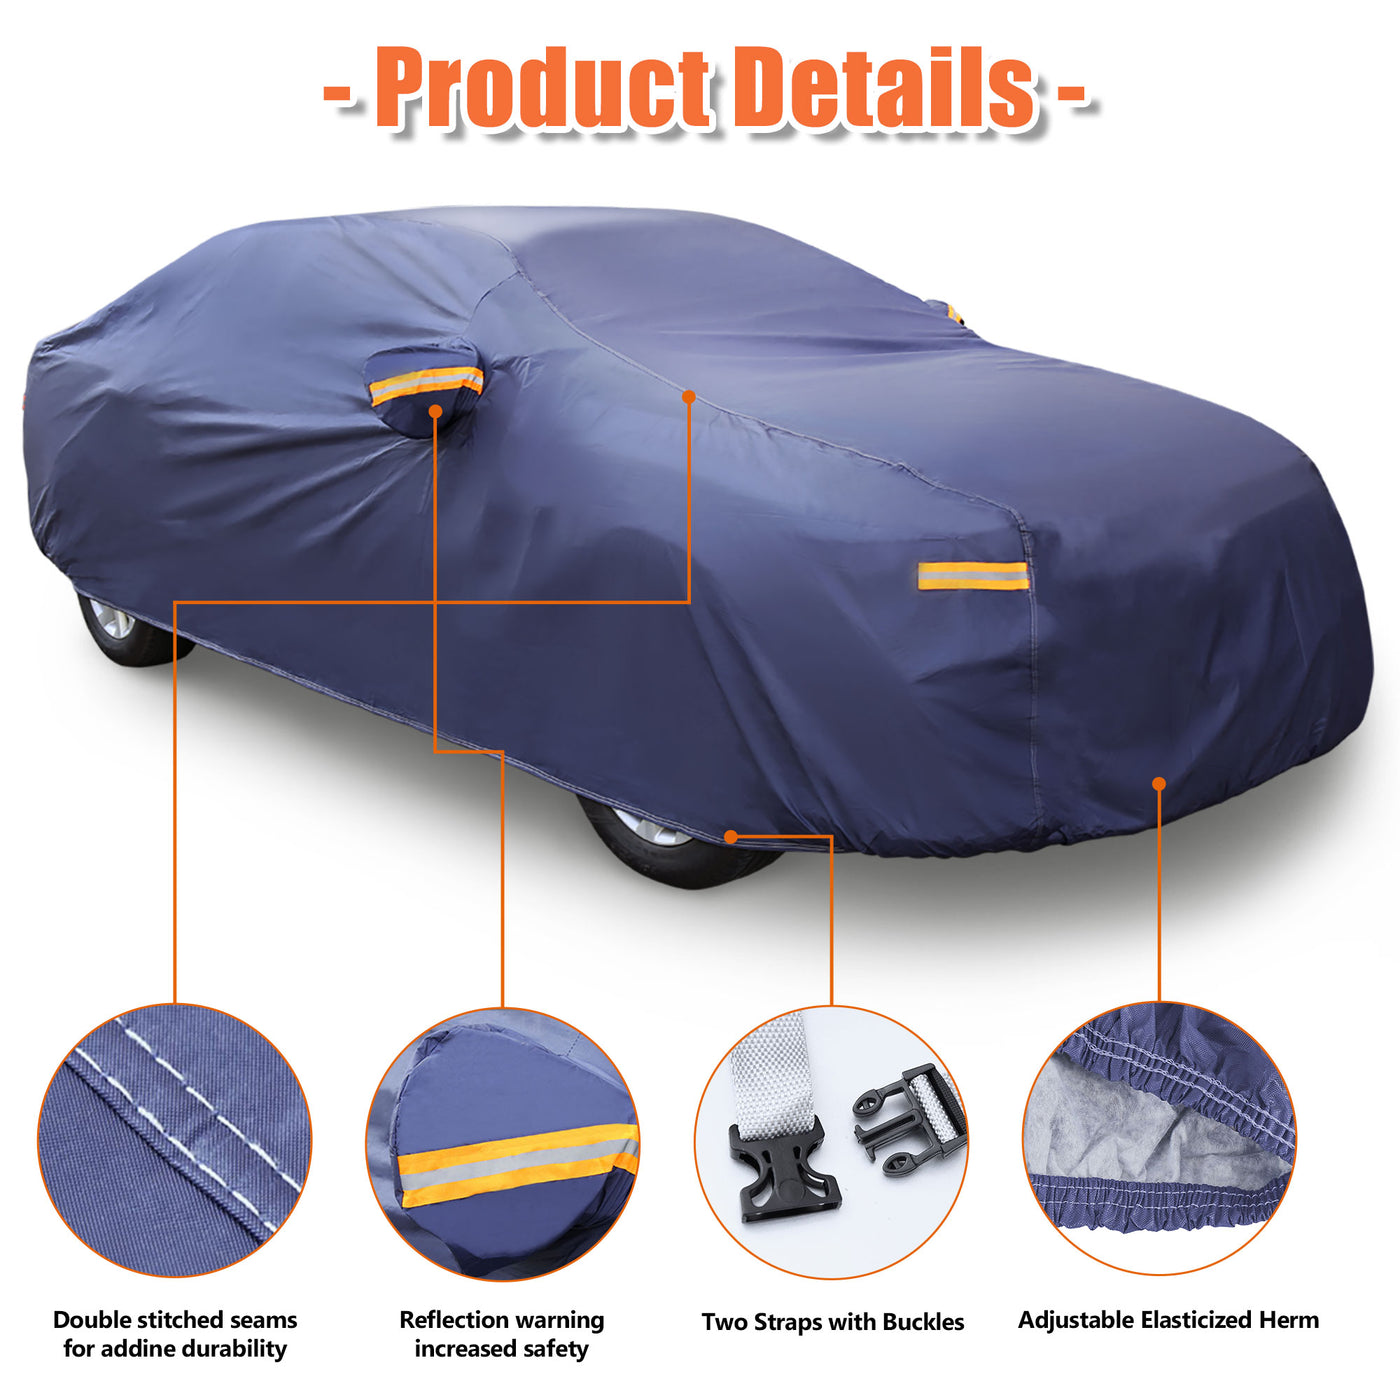 uxcell Uxcell 3L+ Purple Car Cover Rain Snow Sun Heat Resistant 480 x 180 x 160cm